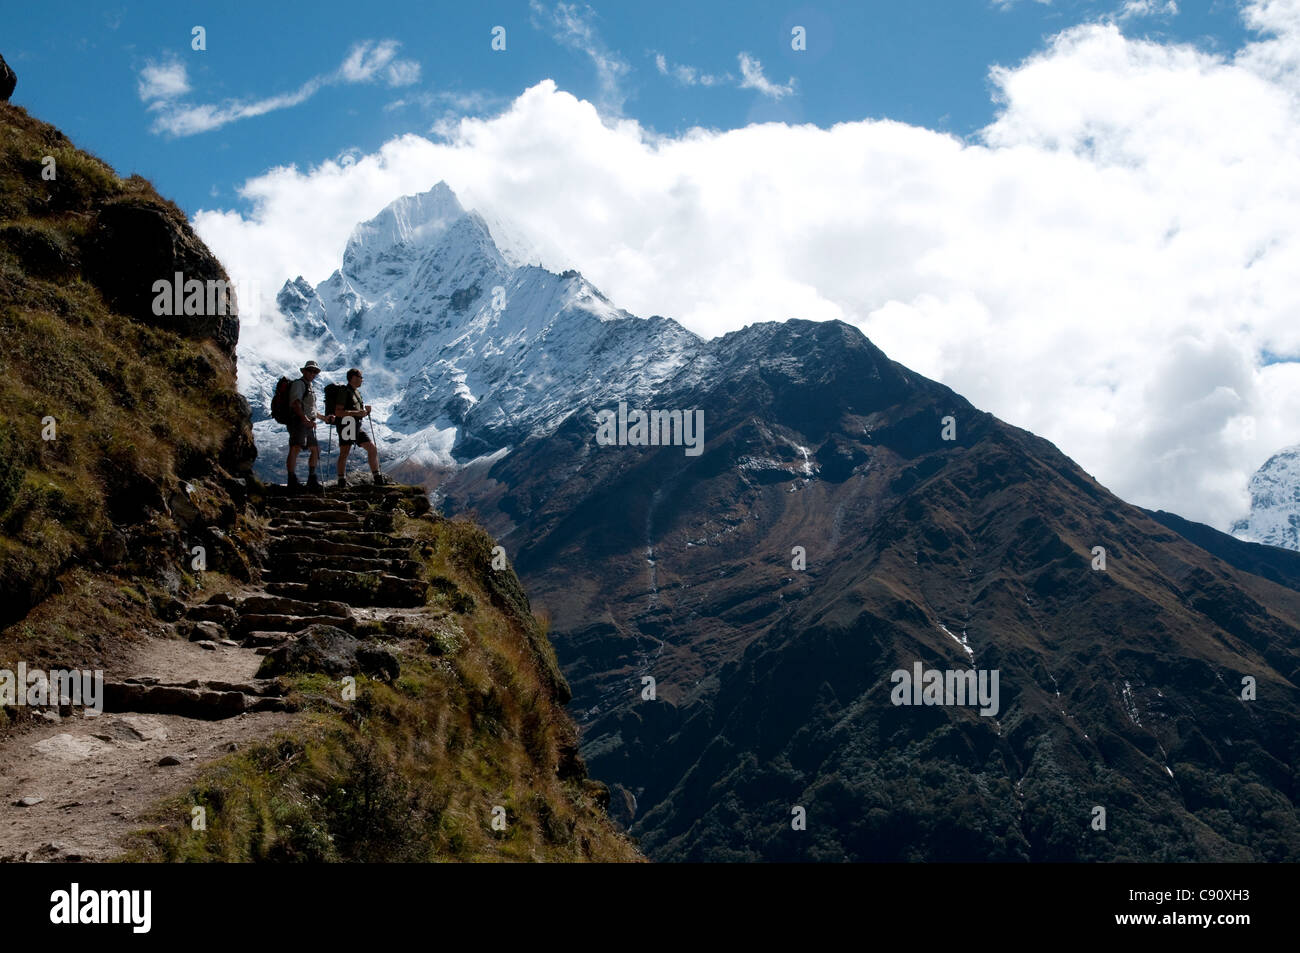 Thamserku is a mountain peak east of Namche Bazaar on the route from Kathmandu through the Solu Khumbu region to Everest Base Stock Photo